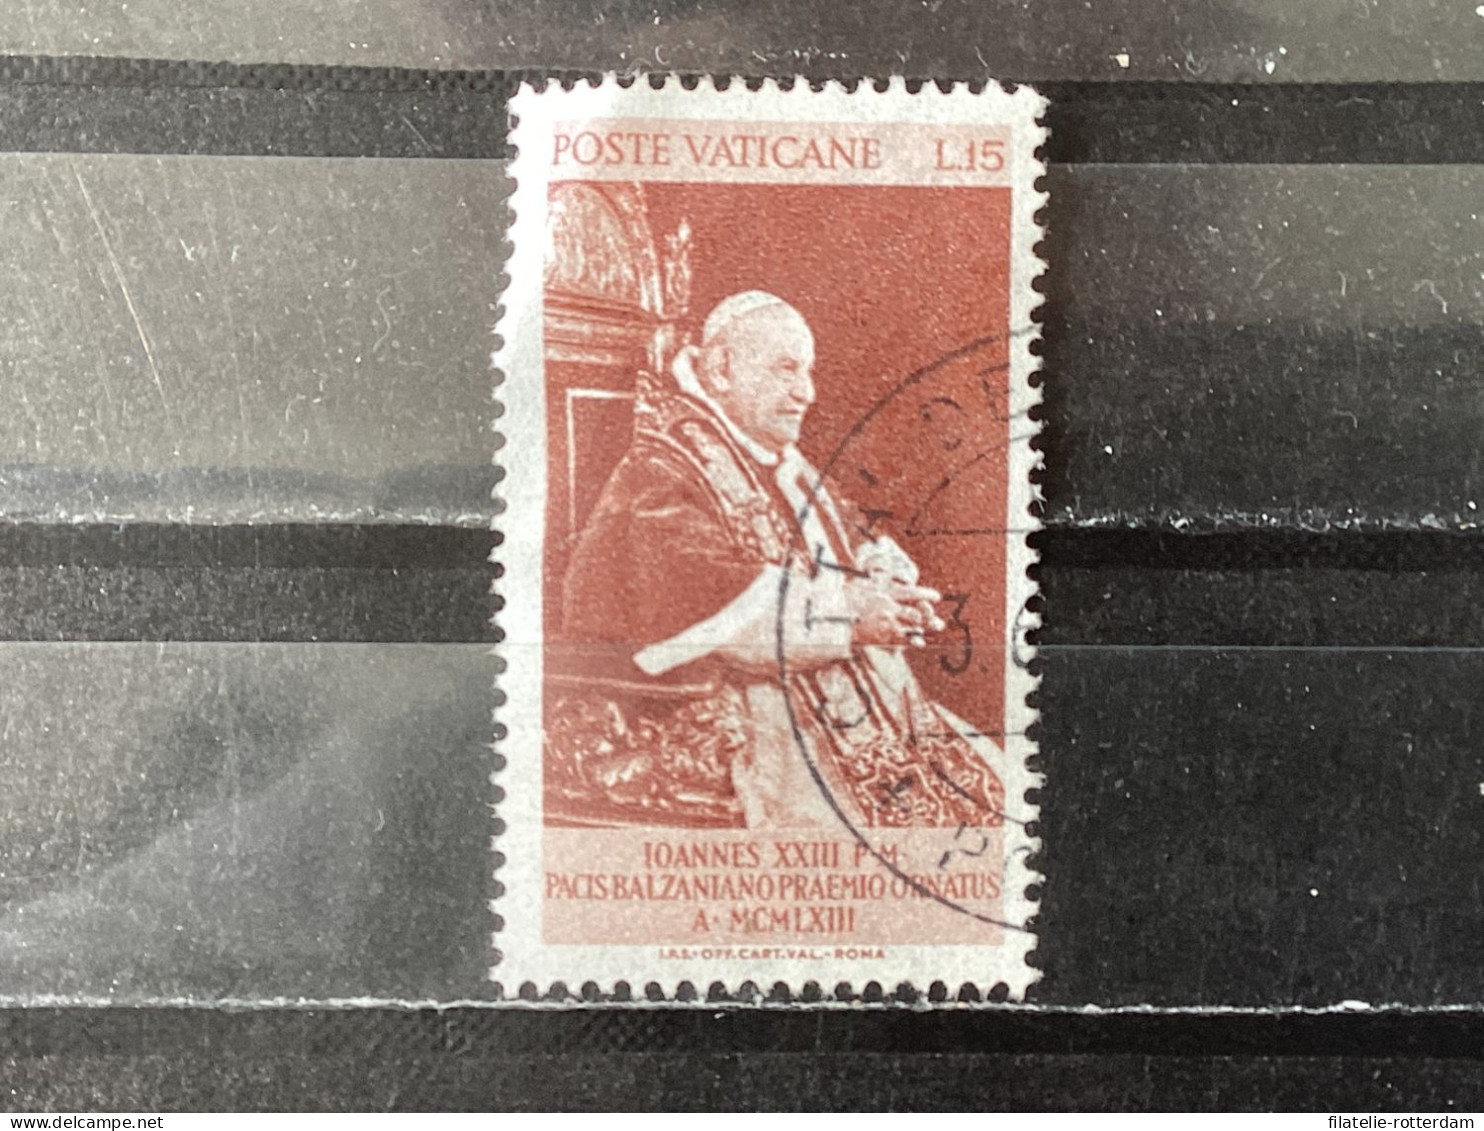 Vatican City / Vaticaanstad - Balzan Price For Peace (15) 1963 - Oblitérés